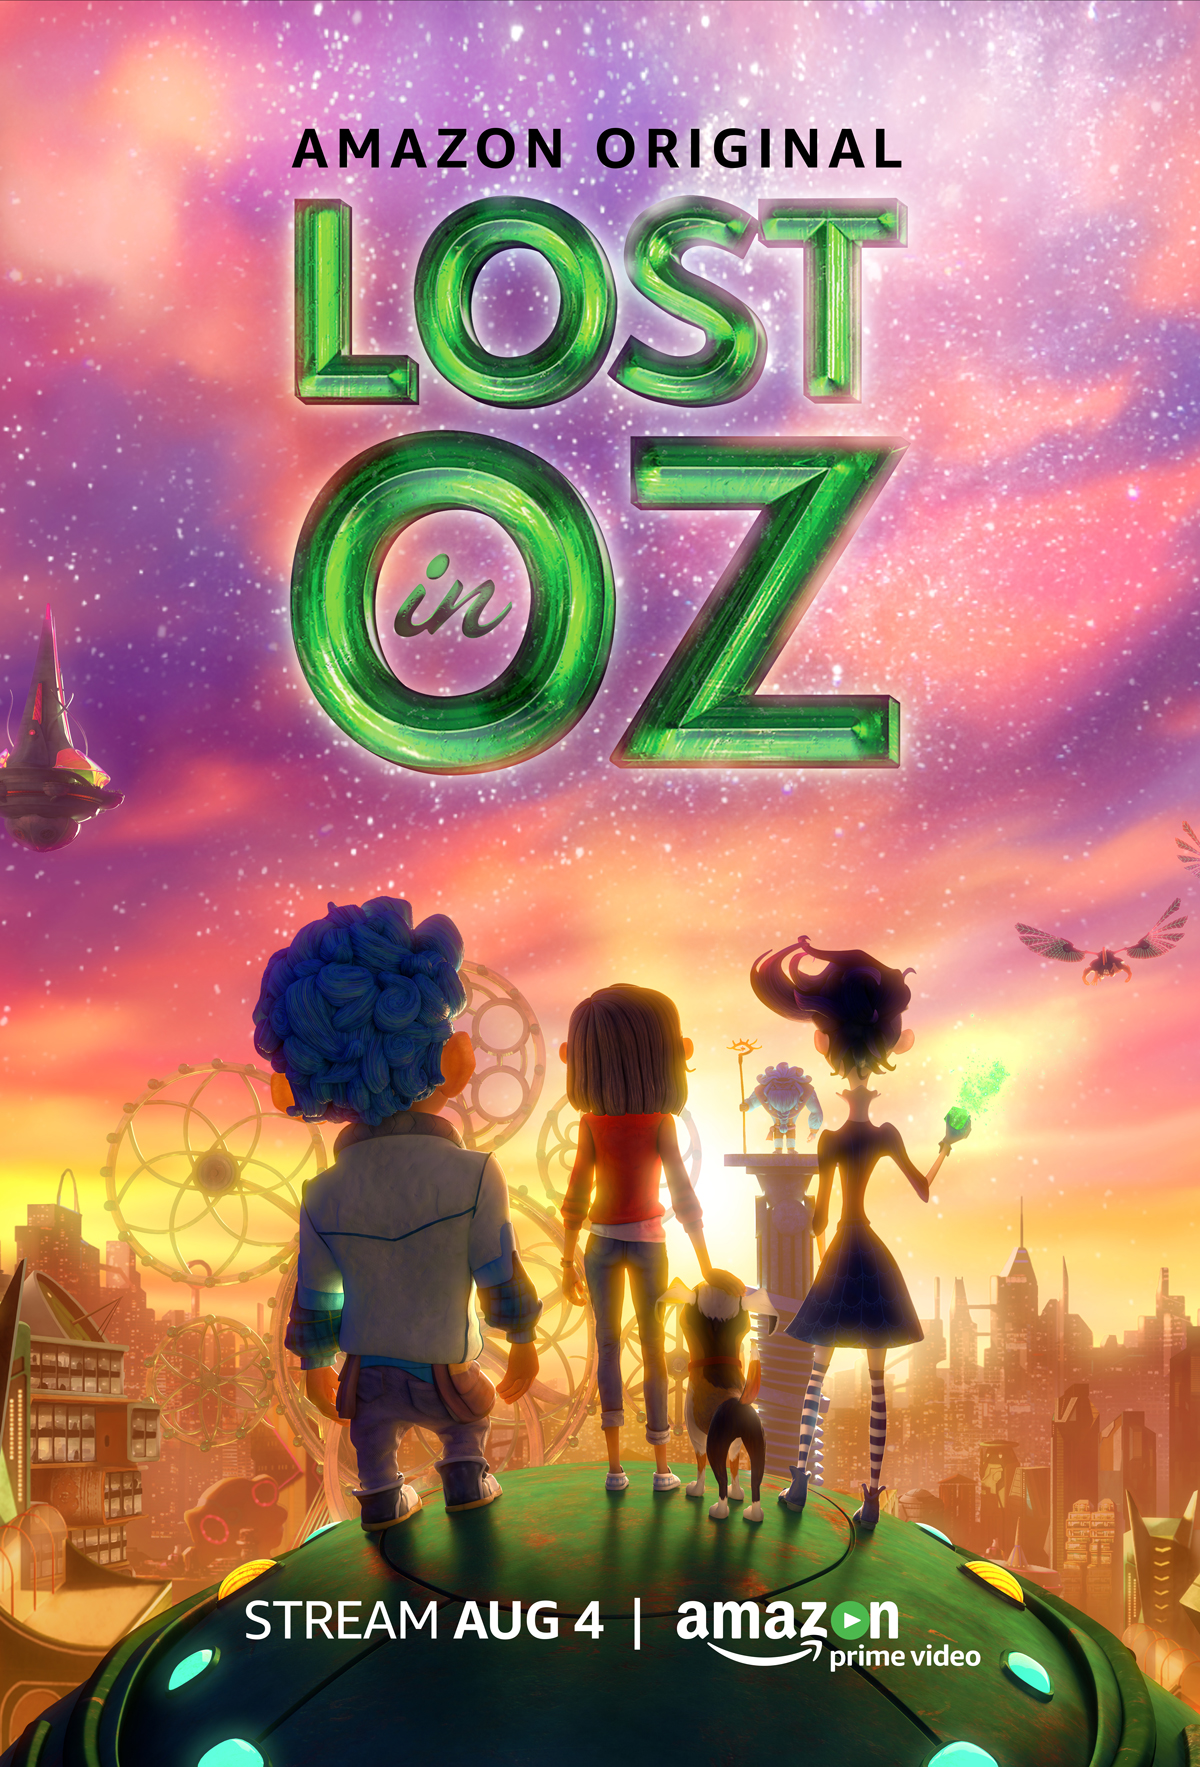 Lost in Oz (TV Series 2015–2018)